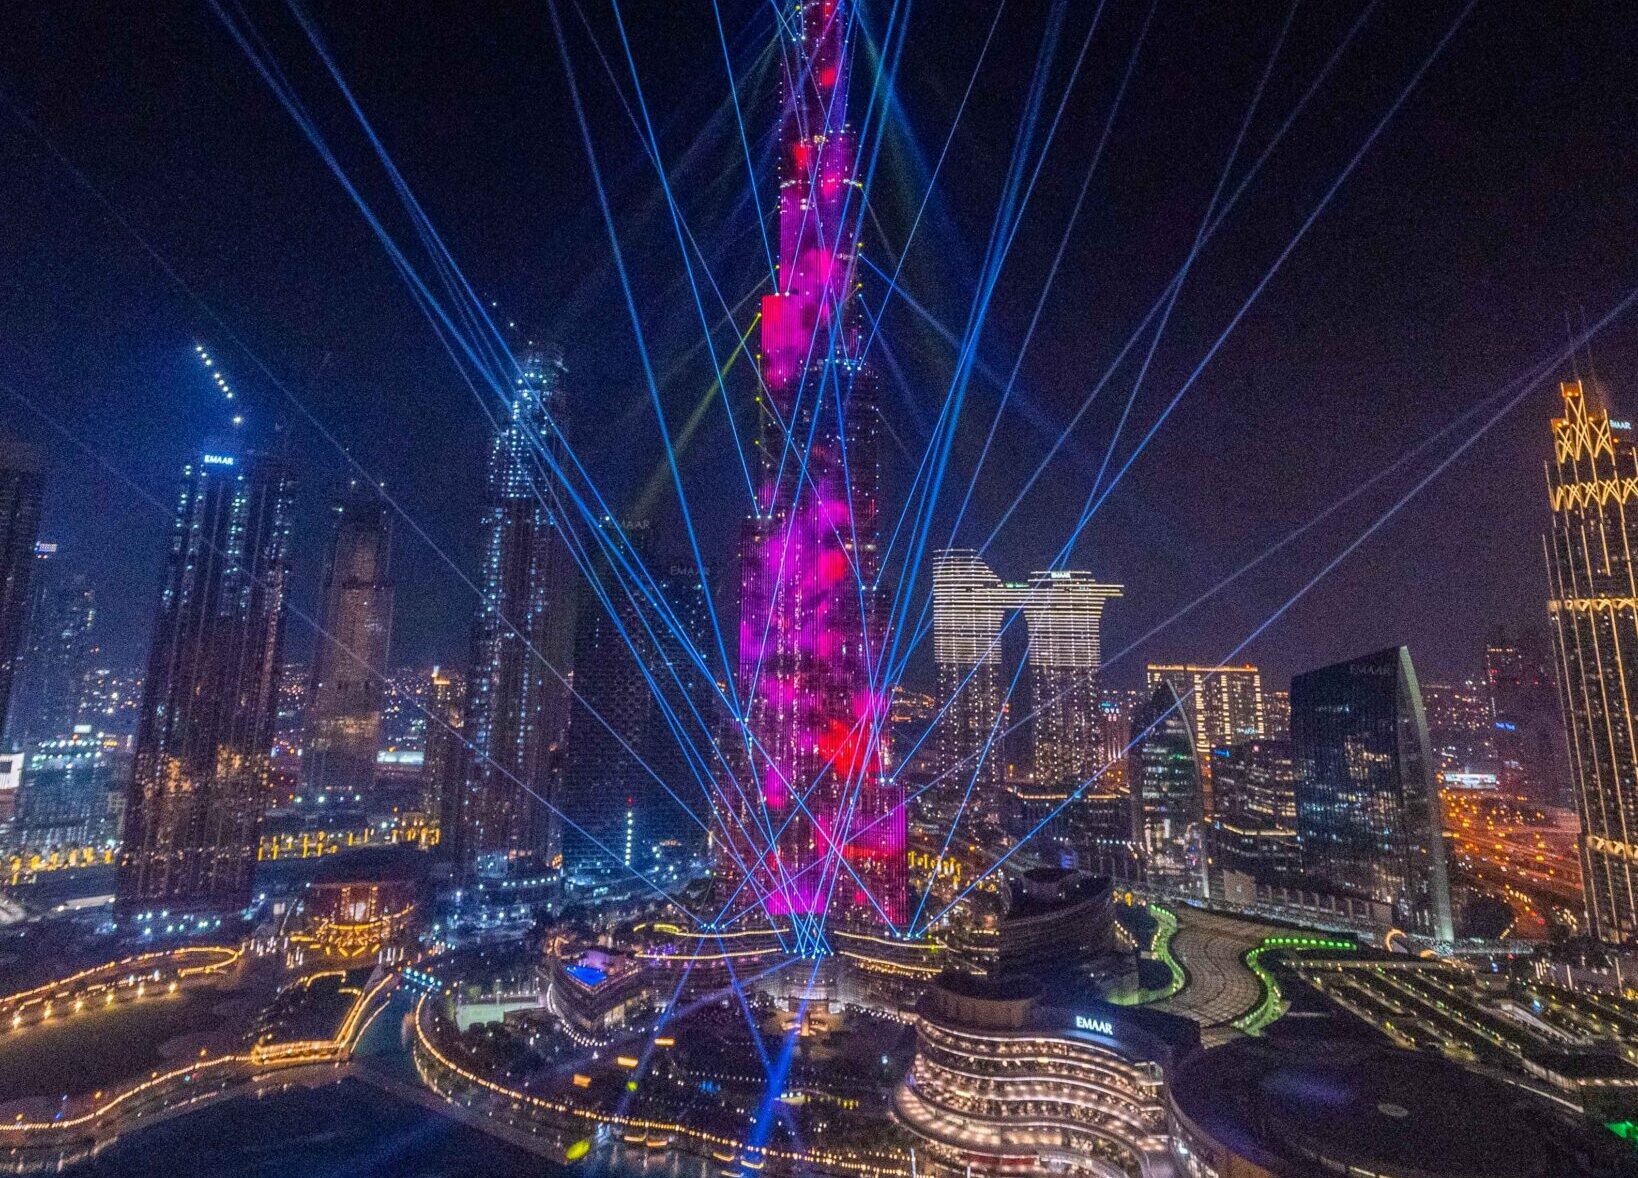 Ultimate Tigge trojansk hest World of Colour! Burj Khalifa's newest LED show illuminates Downtown  Dubai's skyline